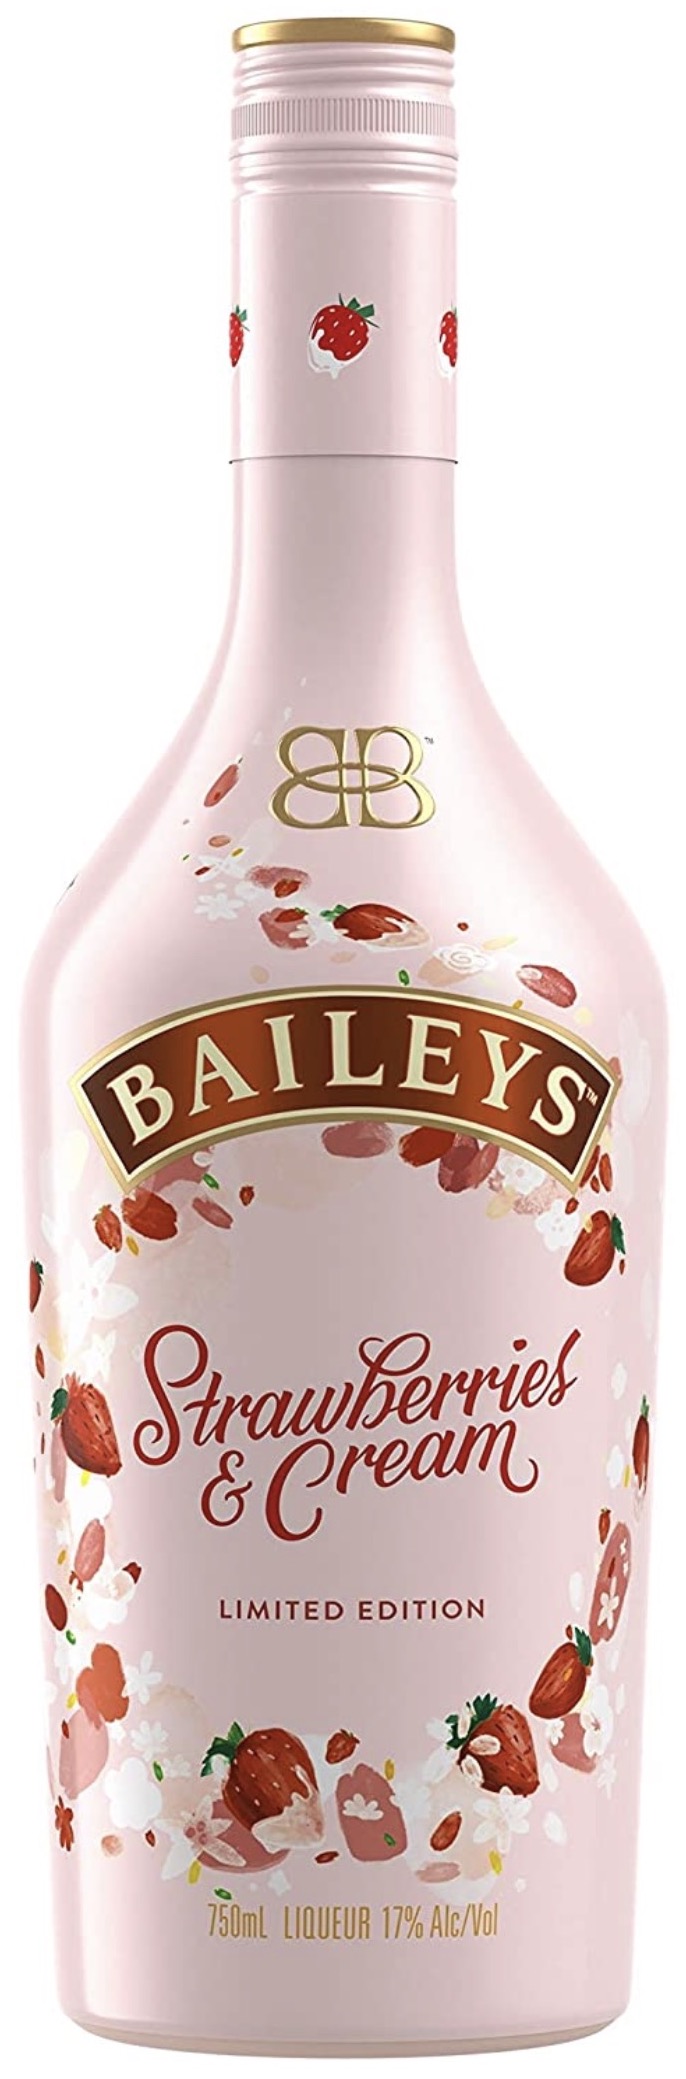 Baileys Strawberries & Cream Sahne, 17% vol. 0,7L